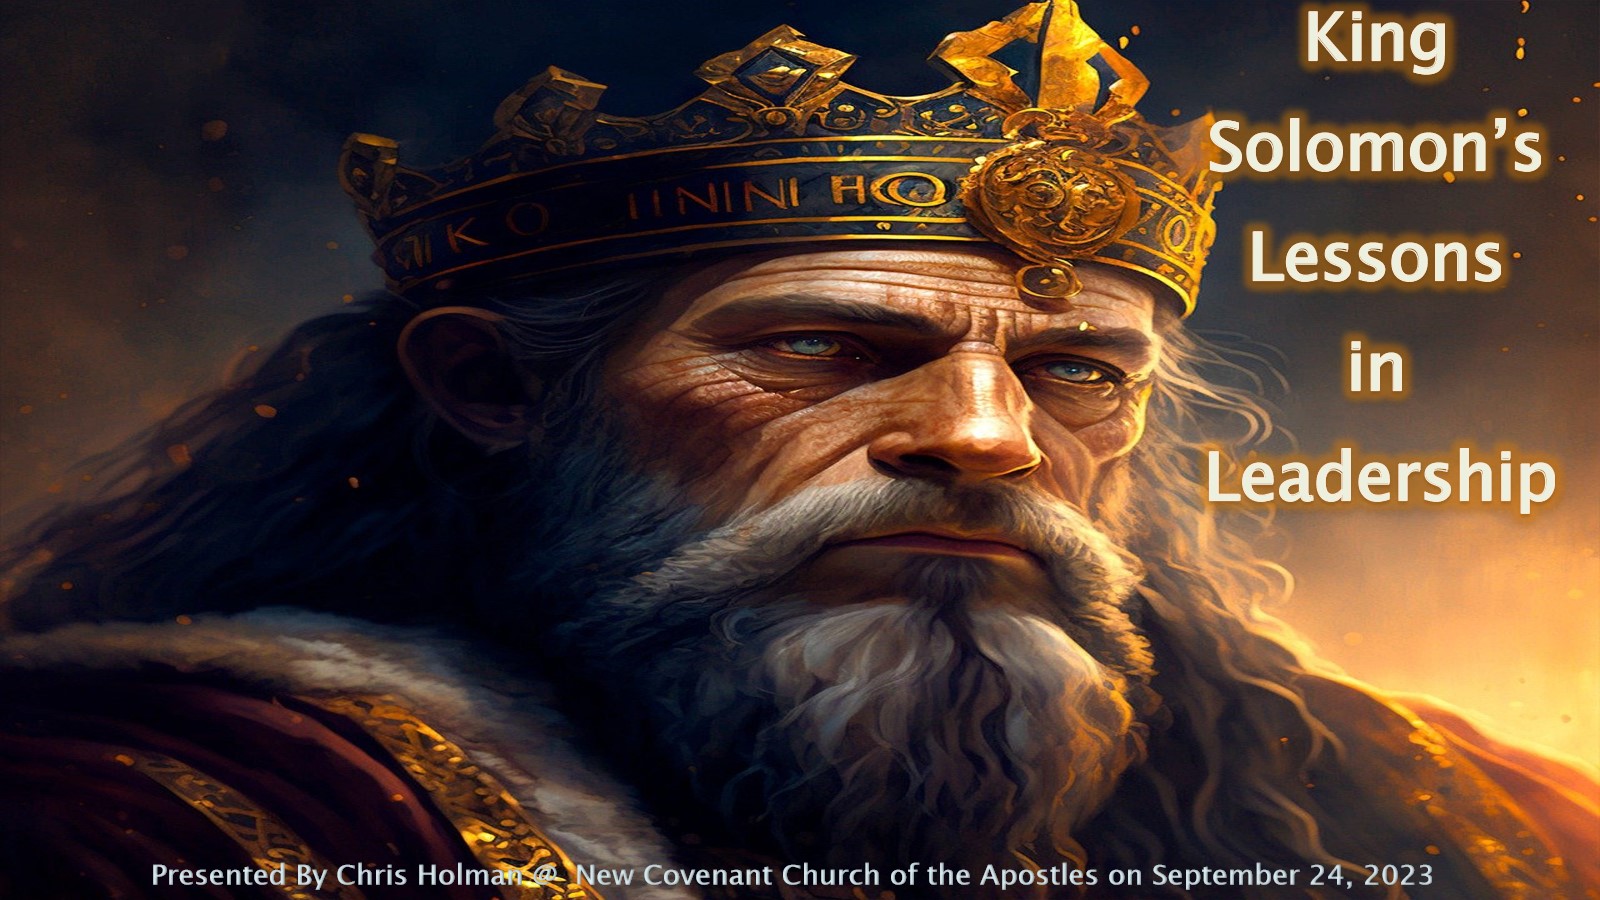 King Solomon’s Lessons in Leadership